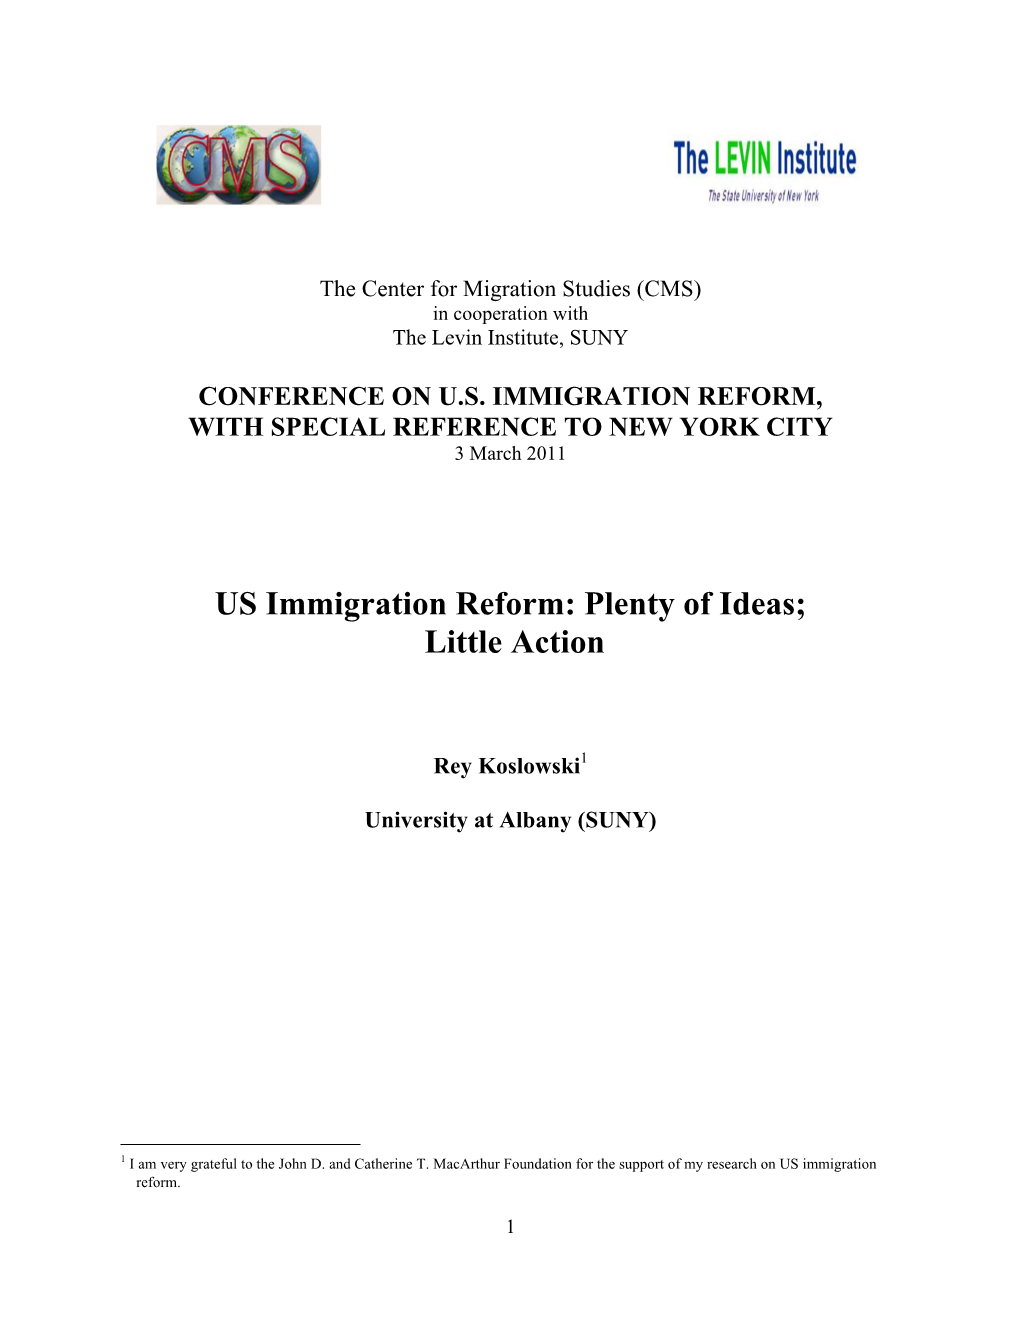 US Immigration Reform: Plenty of Ideas; Little Action